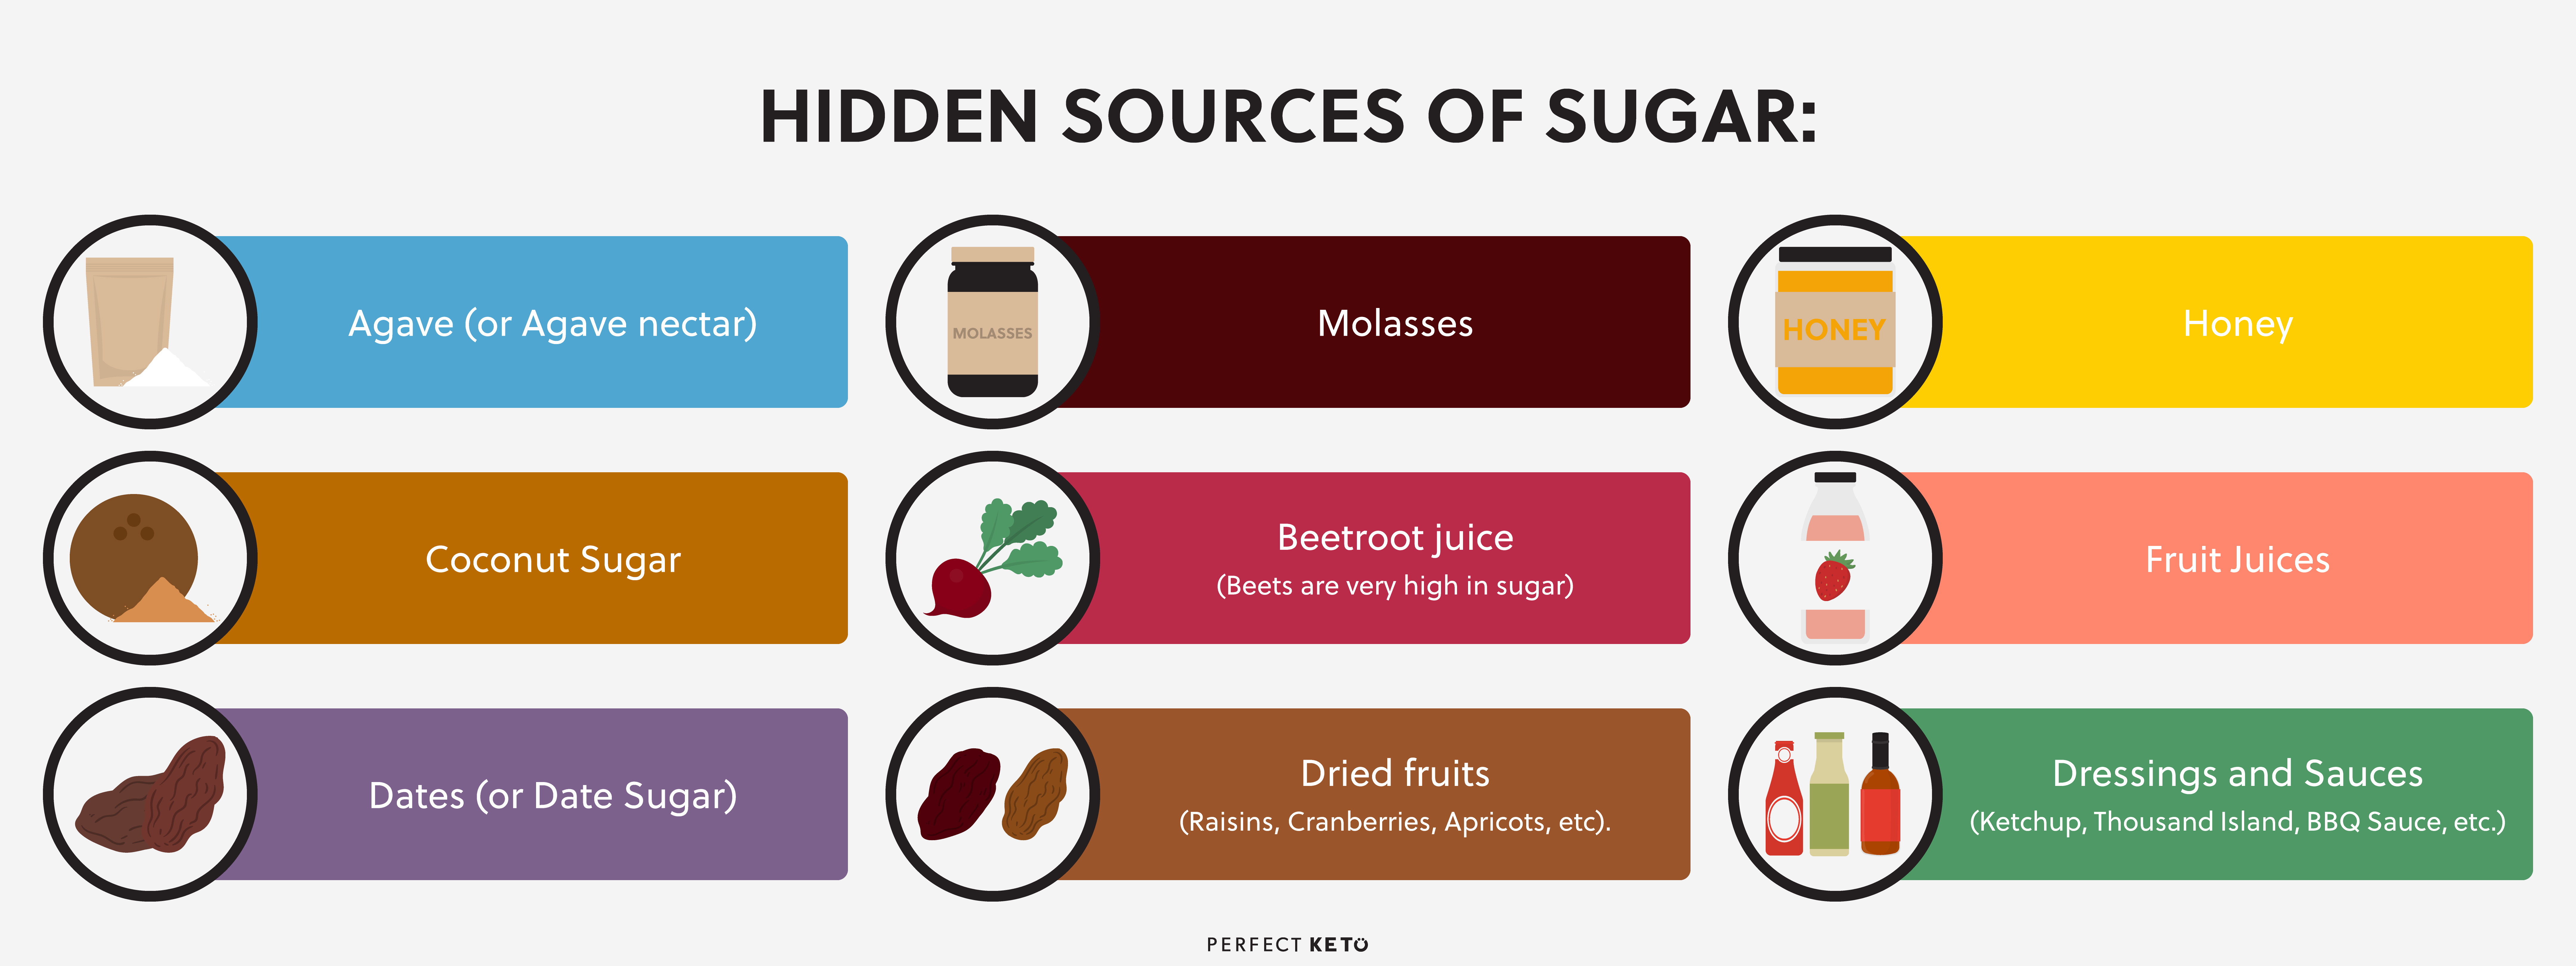 hidden-sources-of-sugar.jpg